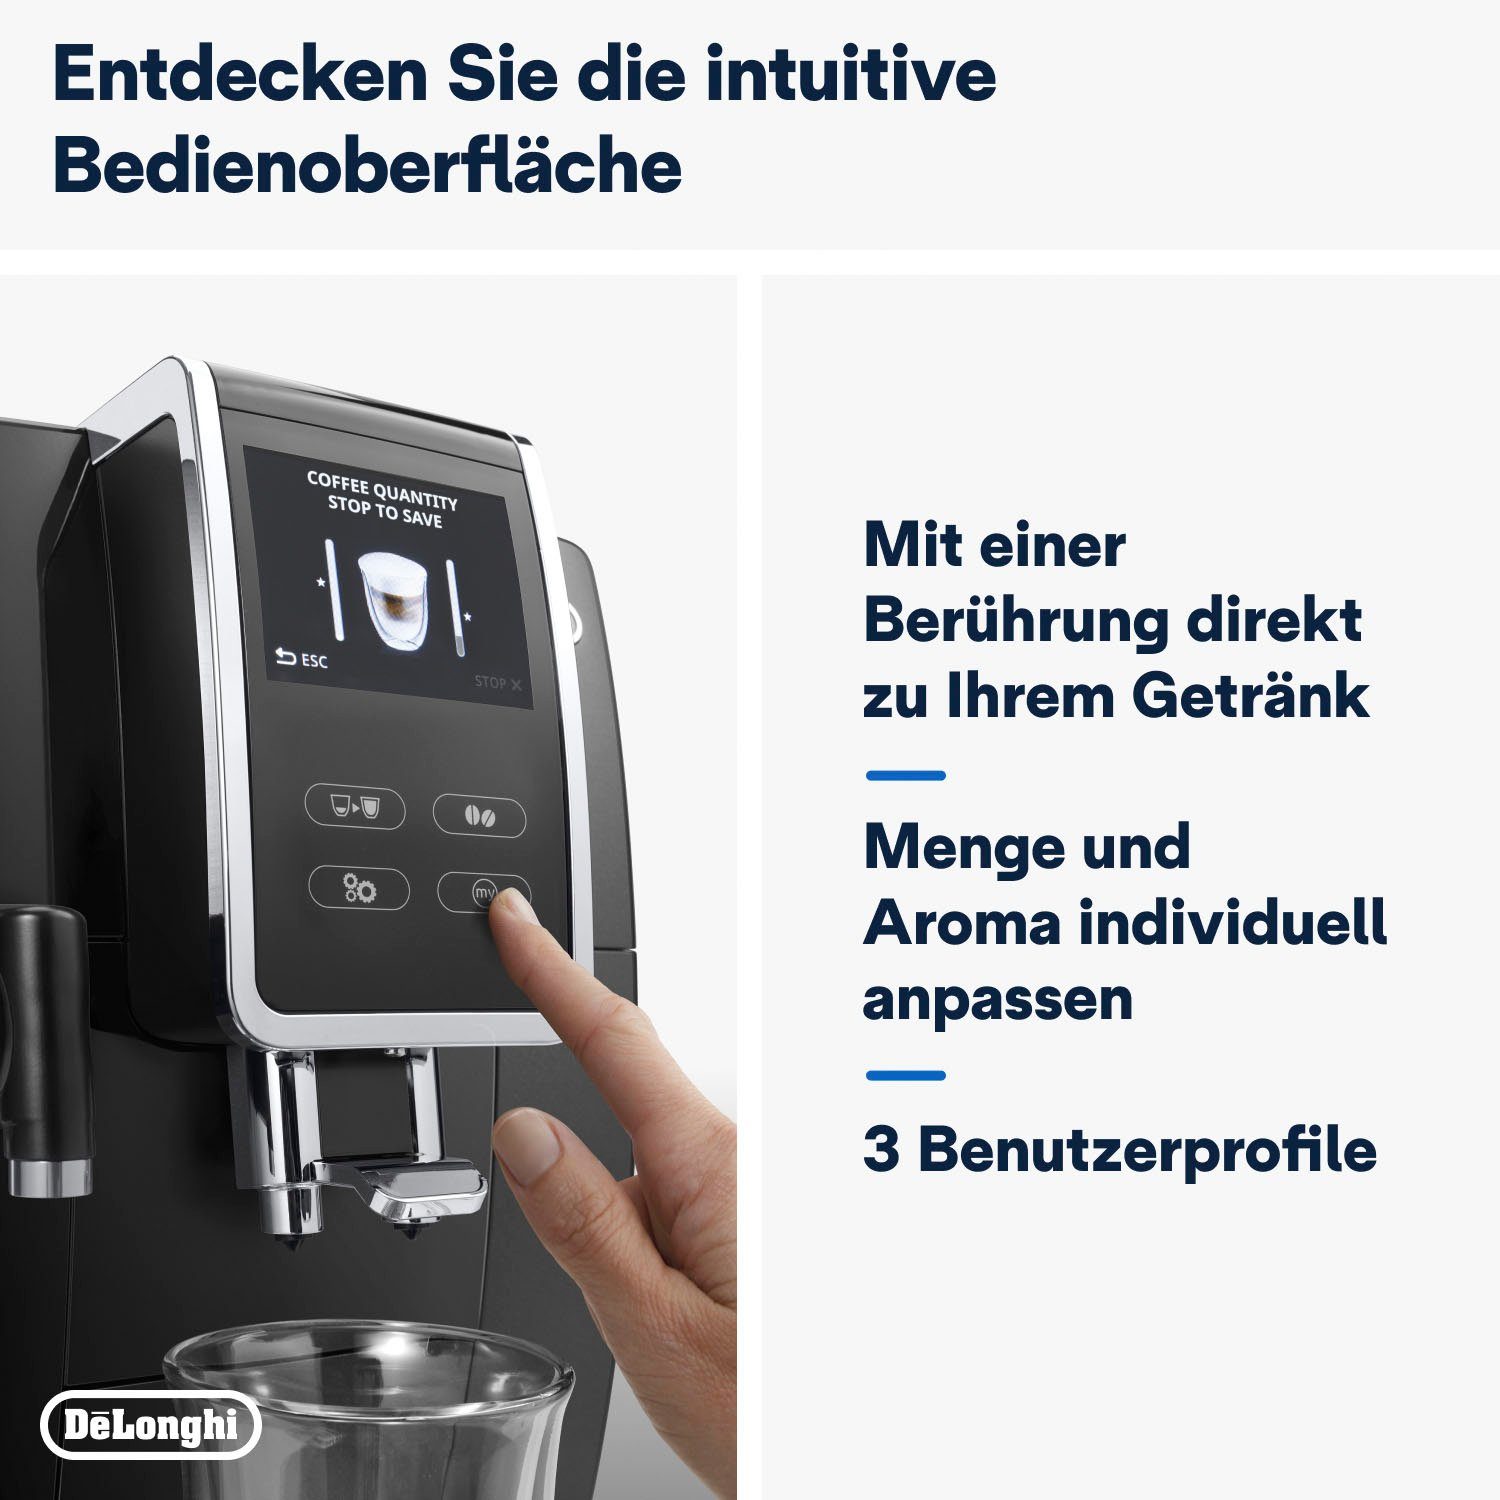 De'Longhi Kaffeevollautomat Dinamica Plus ECAM Milchsystem LatteCrema mit Kaffeekannenfunktion 370.70.B, und